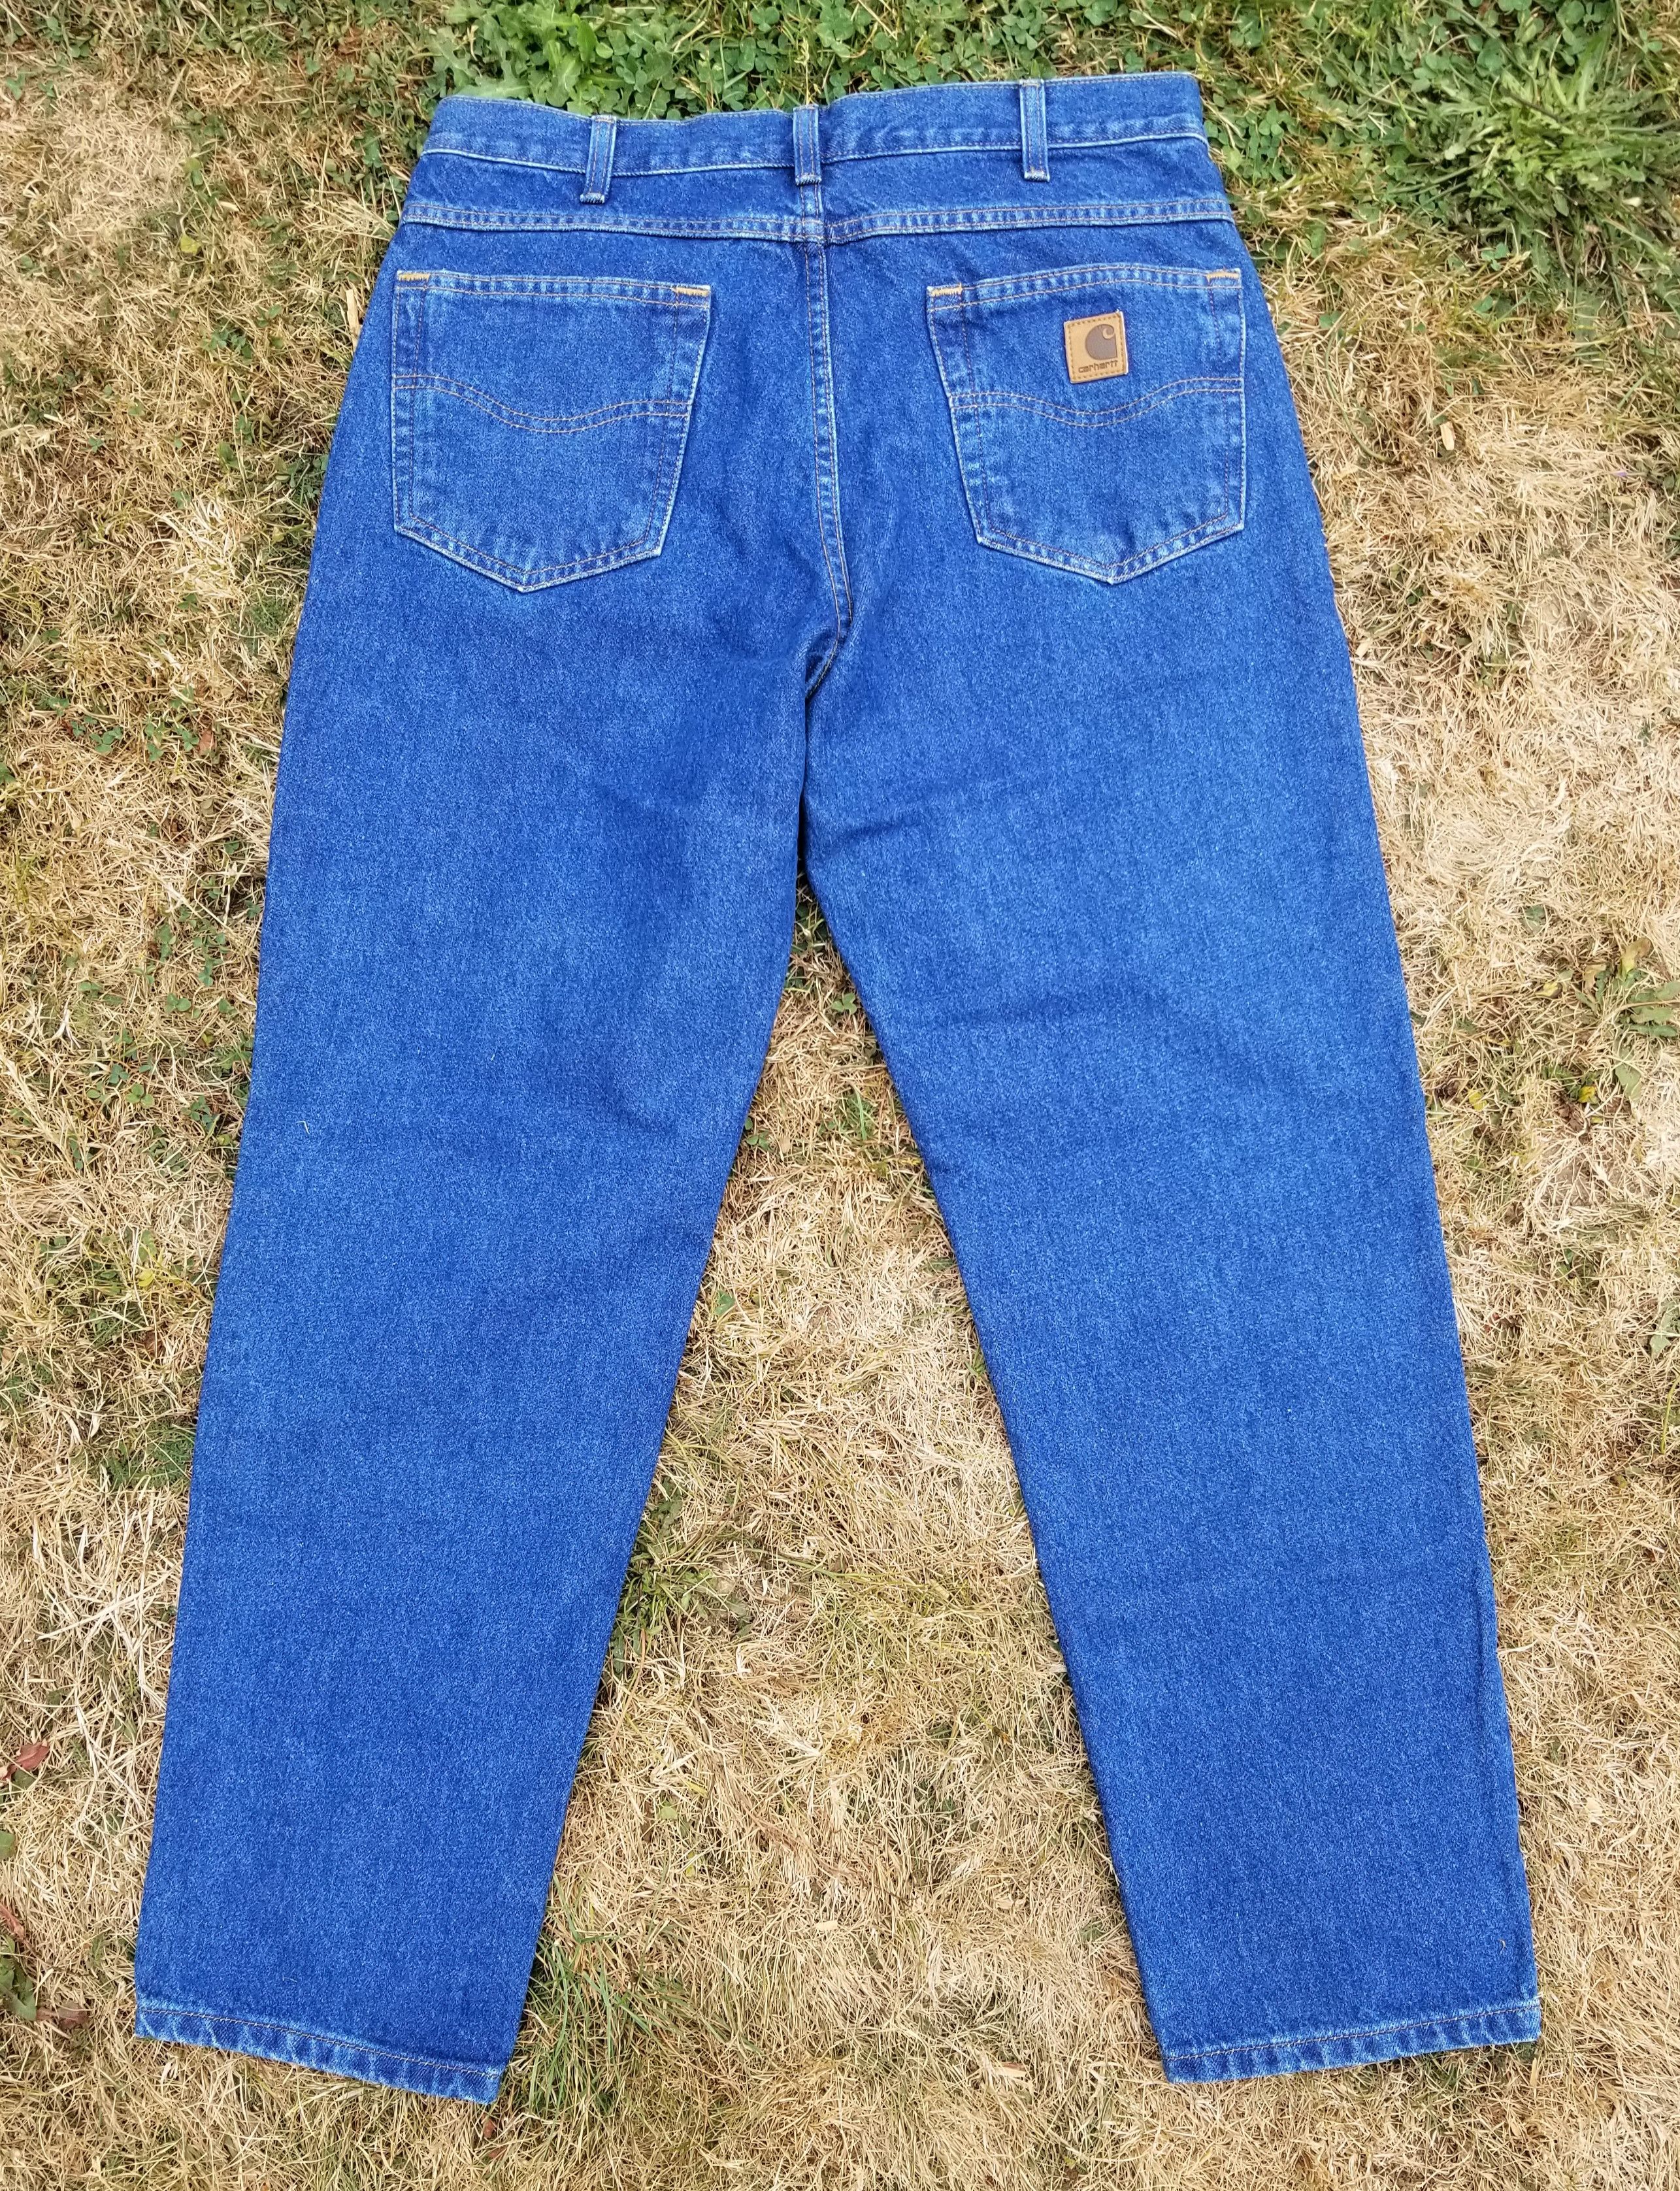 Vintage Vintage CARHARTT Relaxed Fit Blue Denim Jeans 501 Size US 34 / EU 50 - 2 Preview